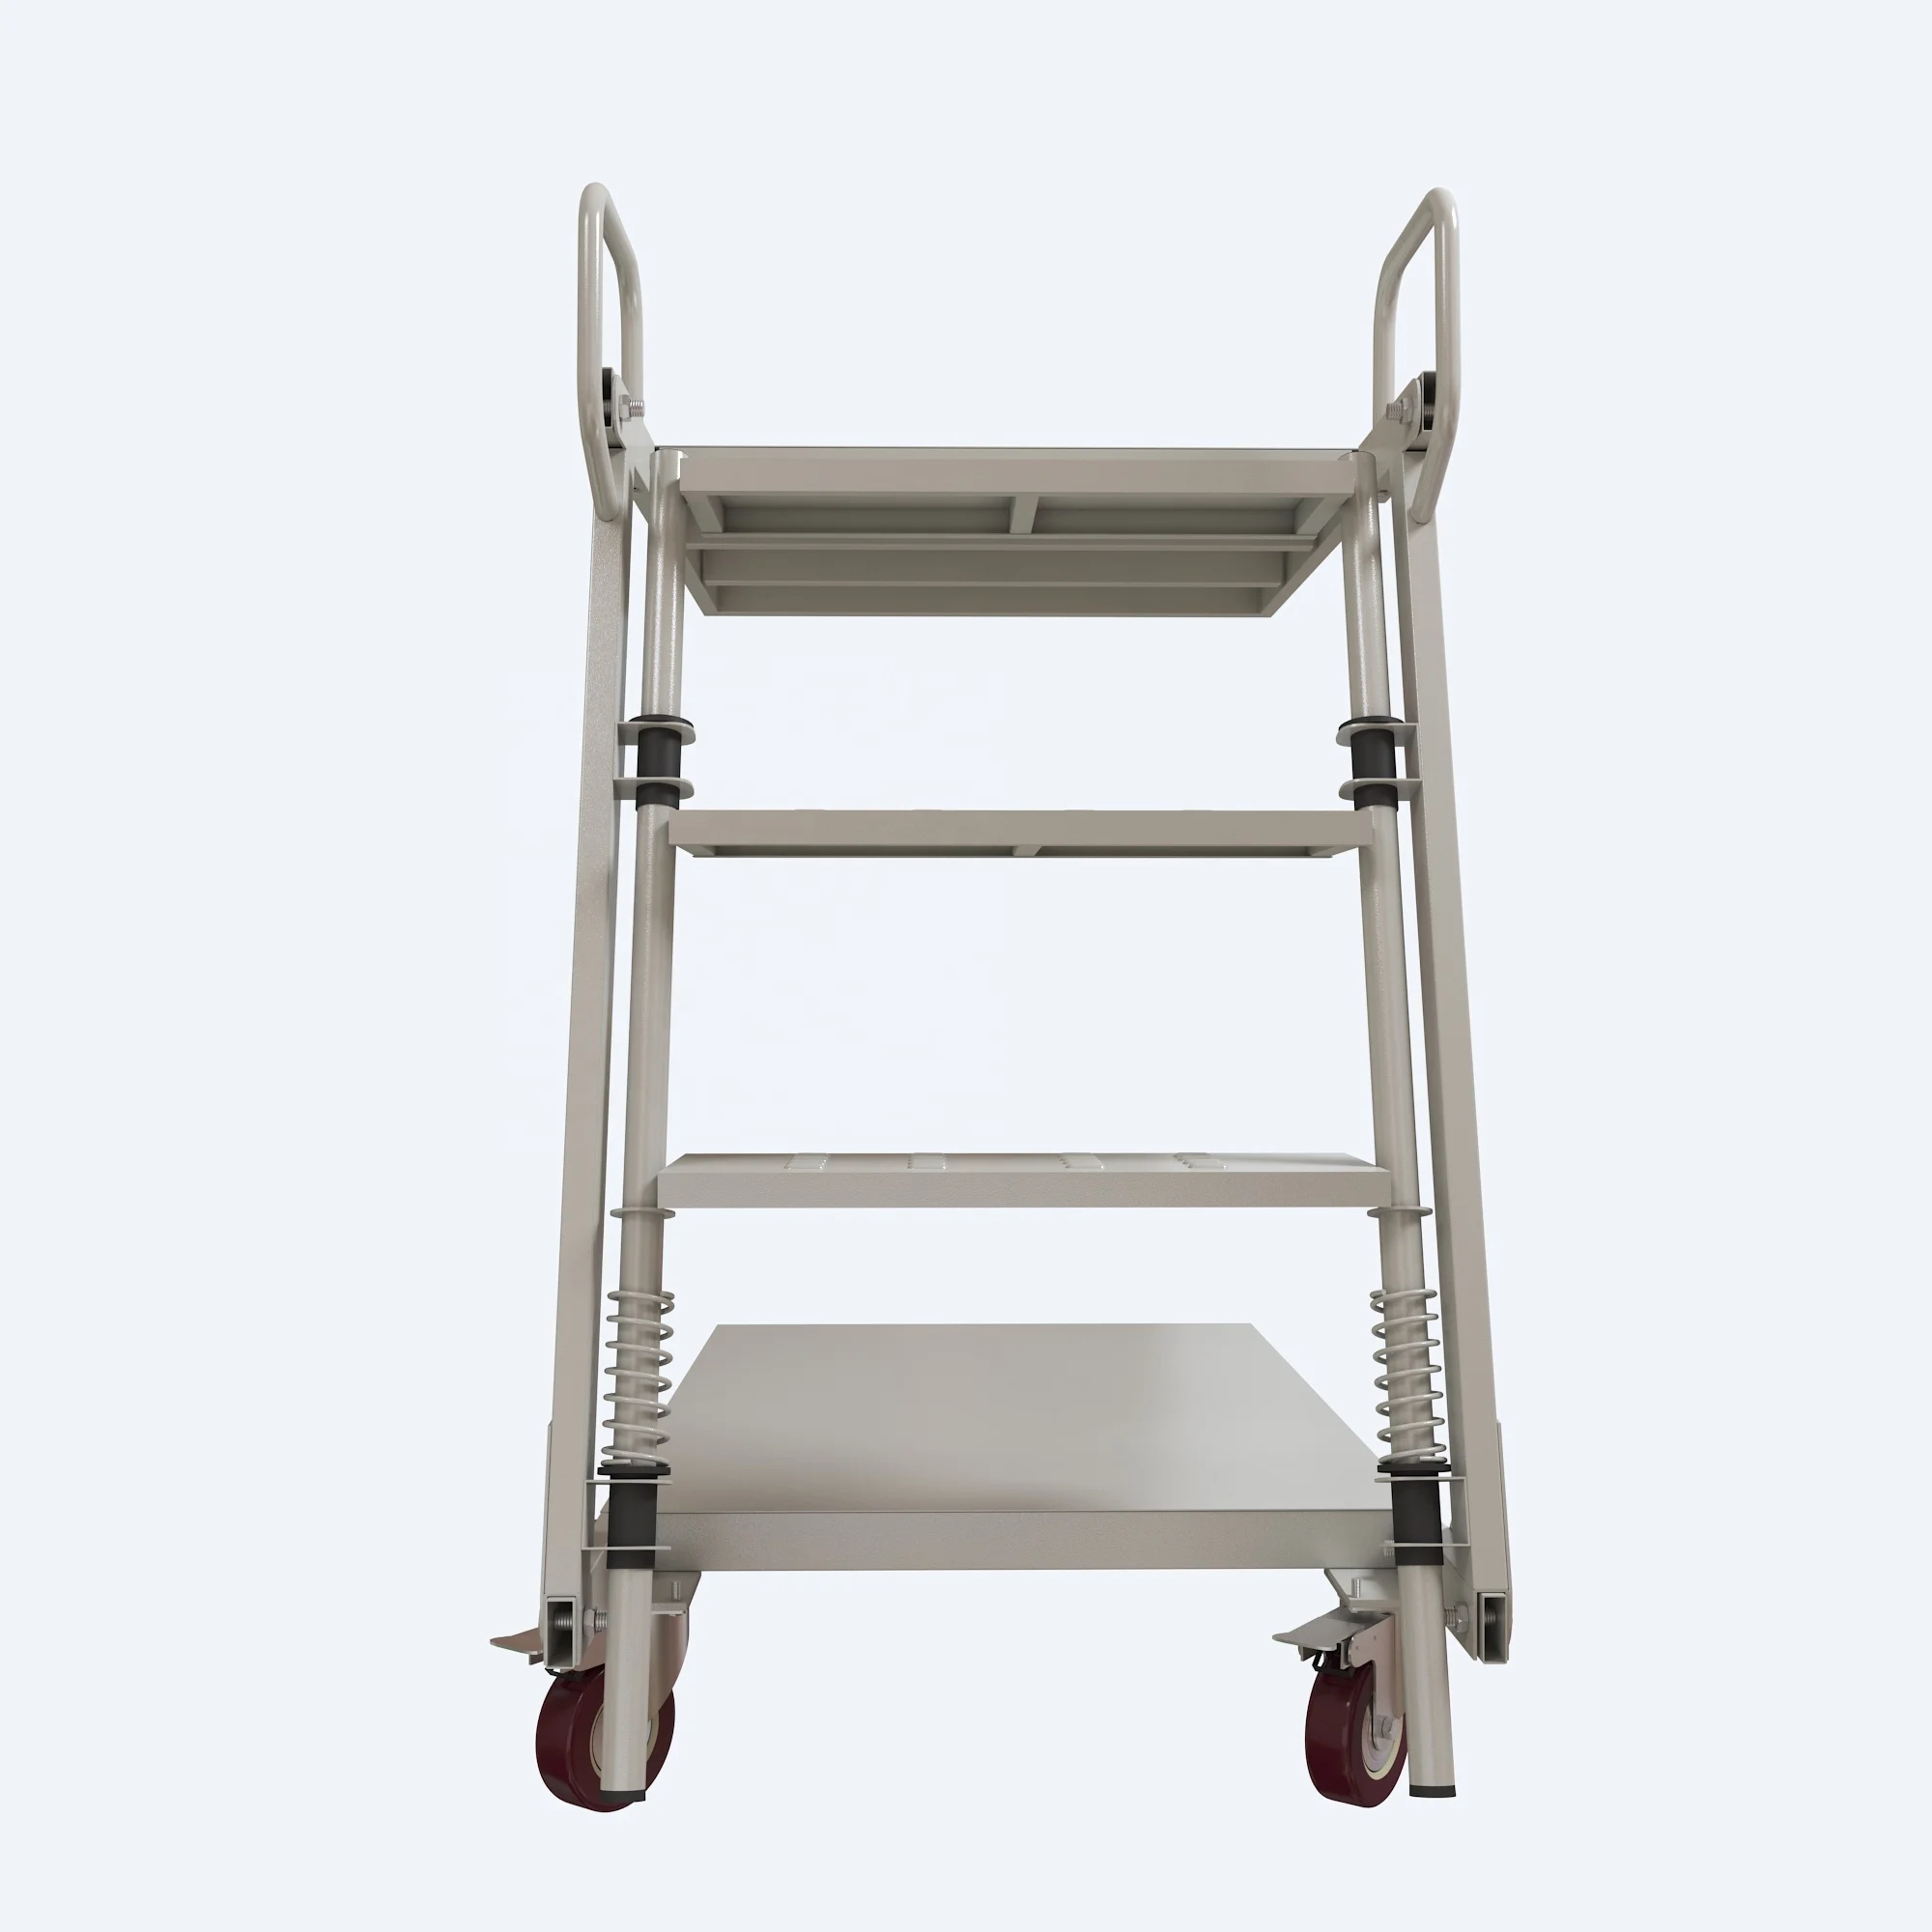 
White good quality aluminium wheel ladder 